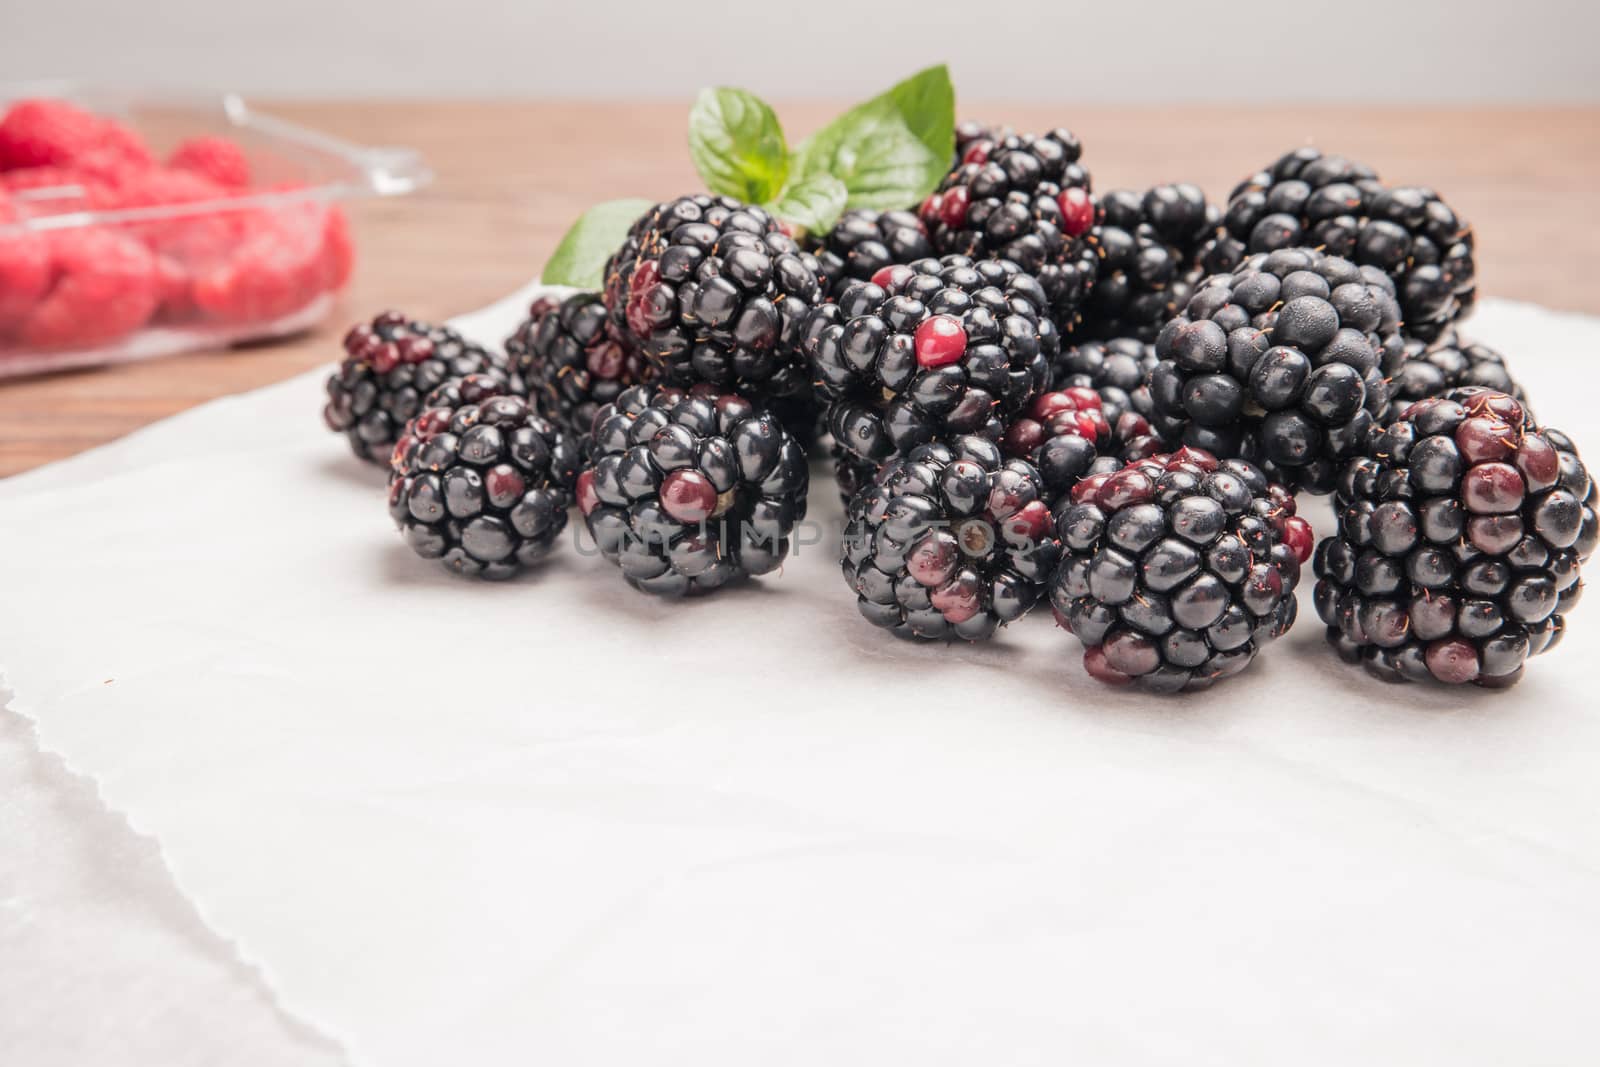 Fresh organic blackberries and raspberries by AnaMarques